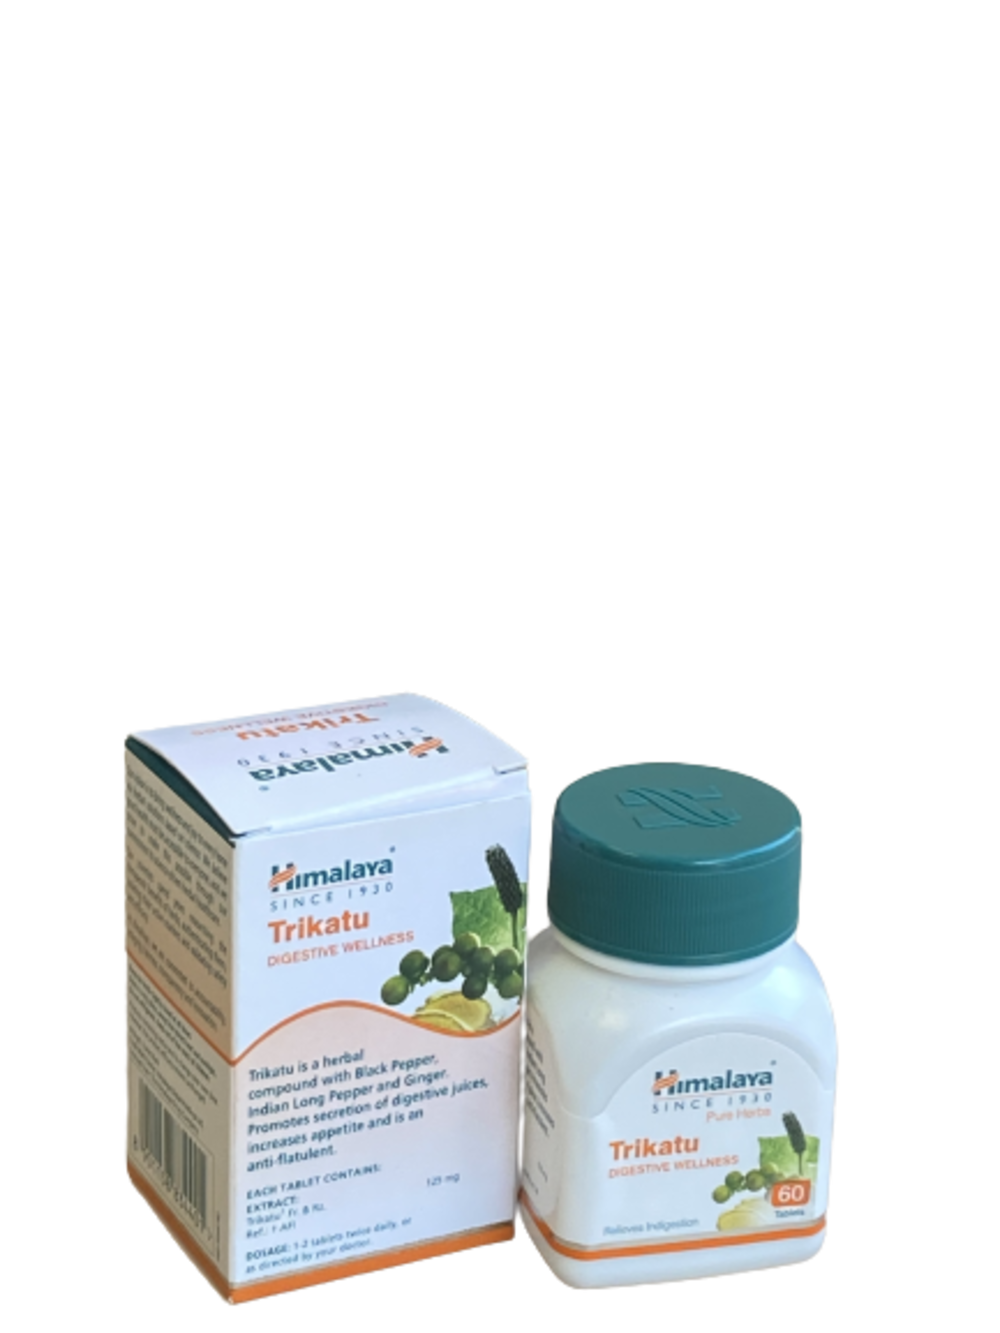 Himalaya Pure Herbs Trikatu Digestive Wellness 60 tablets - Africa Products Shop